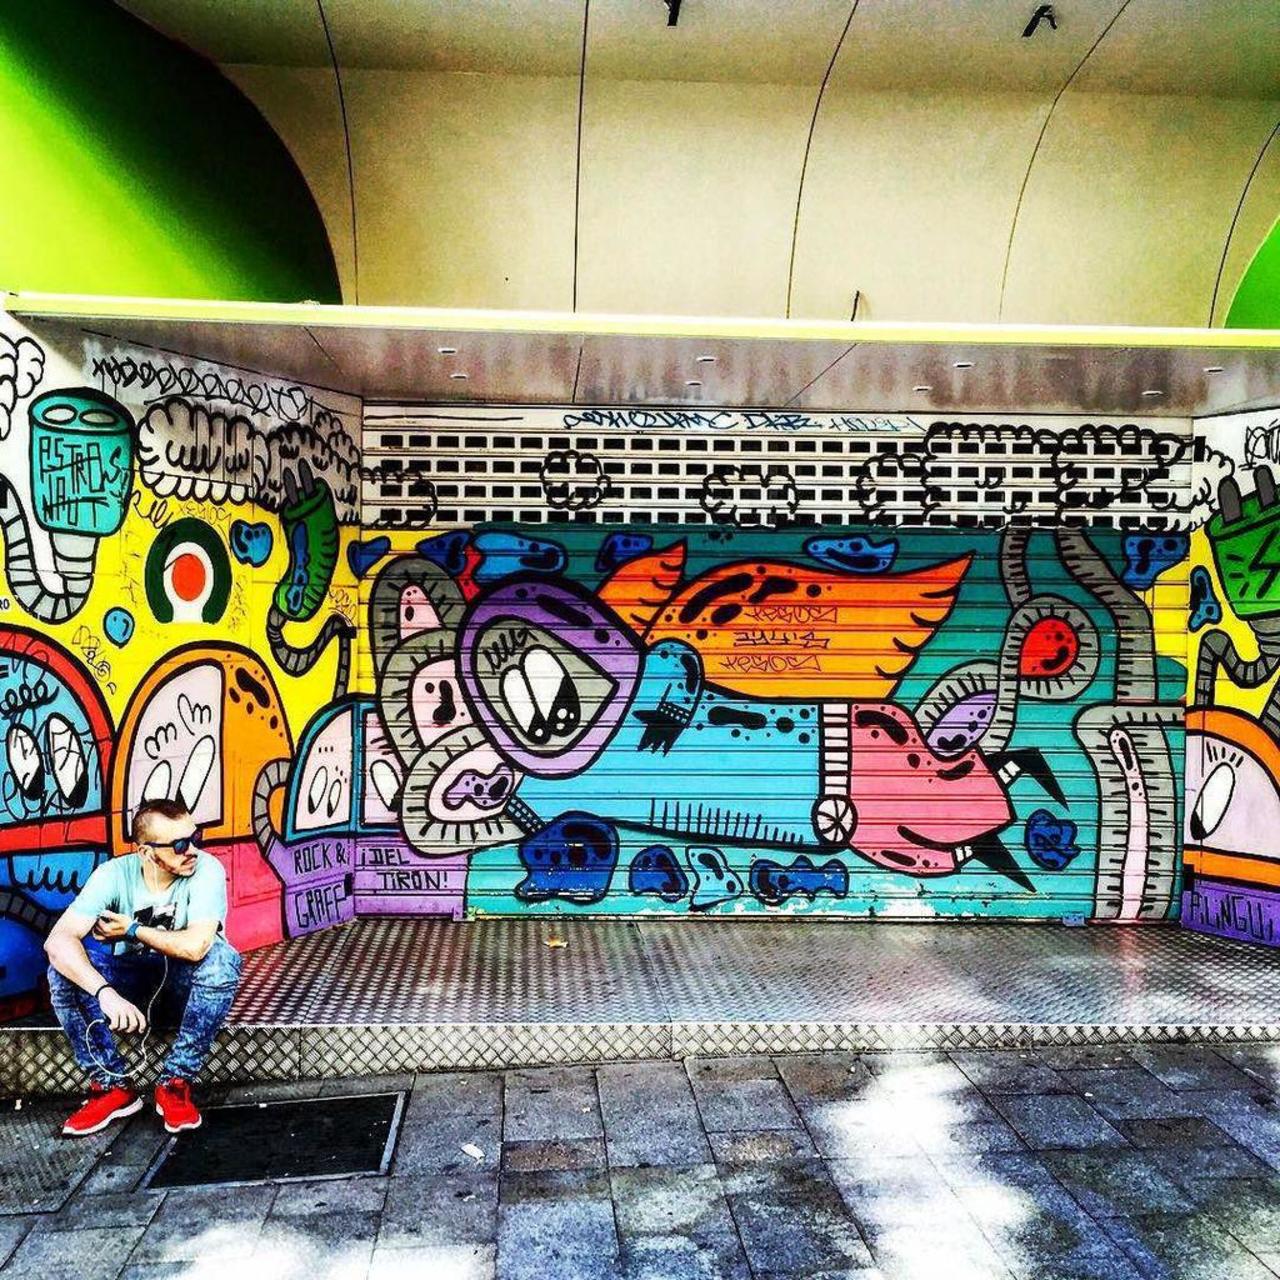 #CalleFuencarral #Madrid #igersmadrid #graffiti #graffitimadrid #instagraffiti #streetart #streetartmadrid #Spain #… http://t.co/XZVxhWrk1x